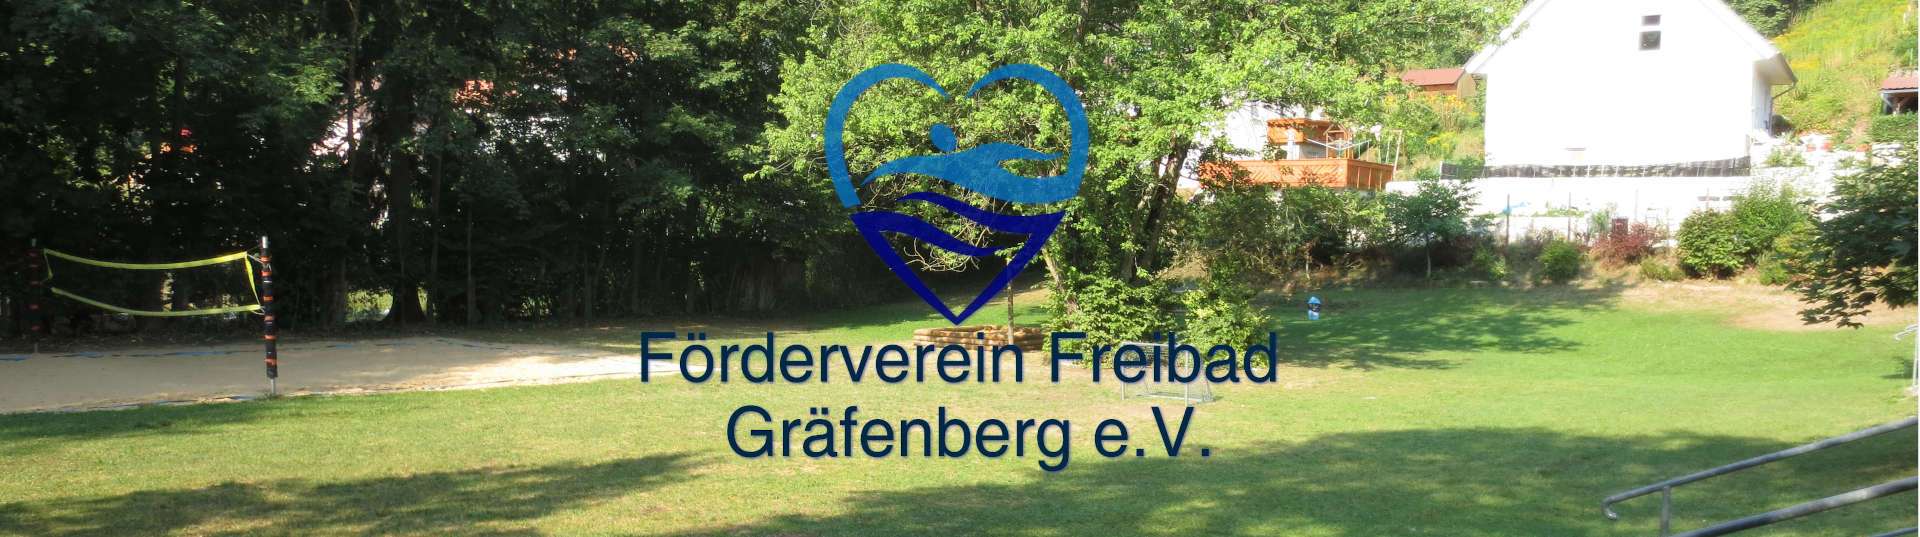 Förderverein Freibad Gräfenberg